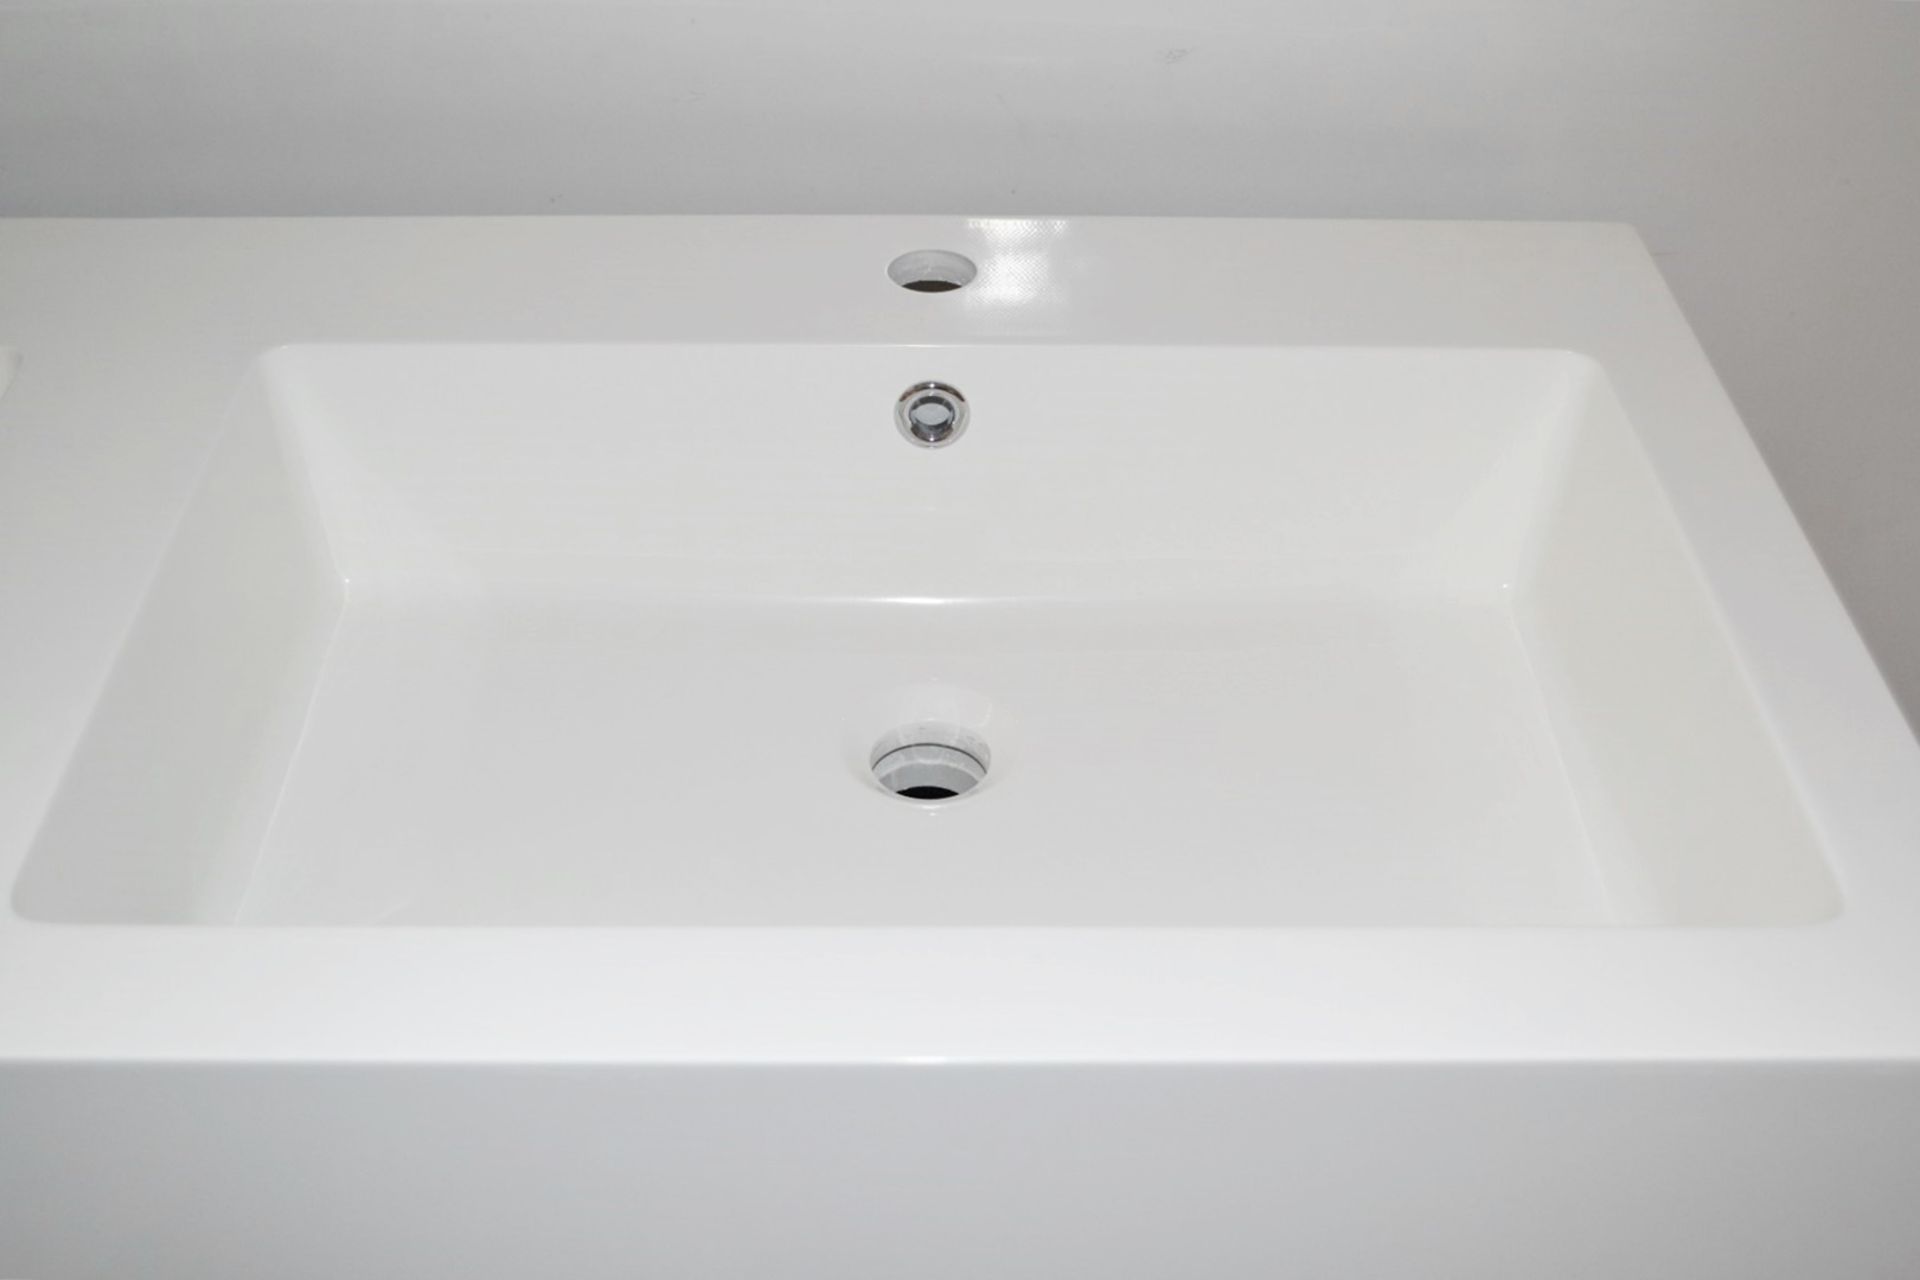 1 x Gloss White 1200mm 4-Door Double Basin Freestanding Bathroom Cabinet - CL307 - Total RRP £807.00 - Image 2 of 9